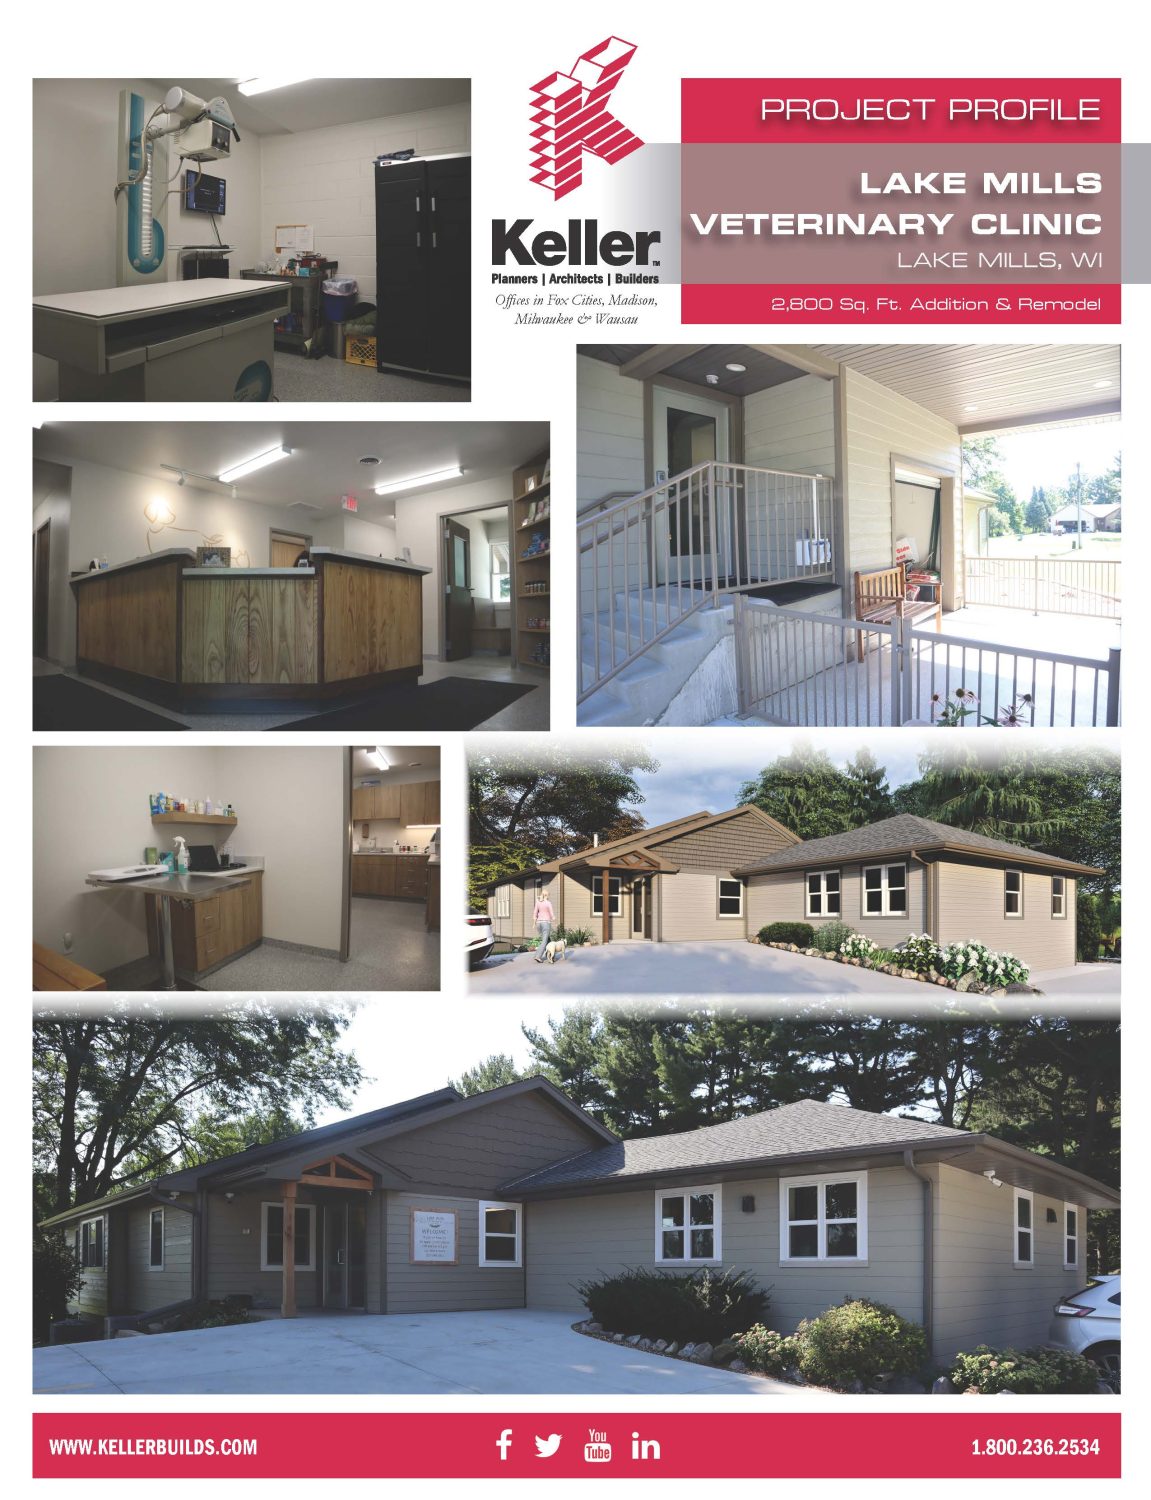 Lake Mills Veterinary Clinic scaled - Lake Mills Veterinary Clinic